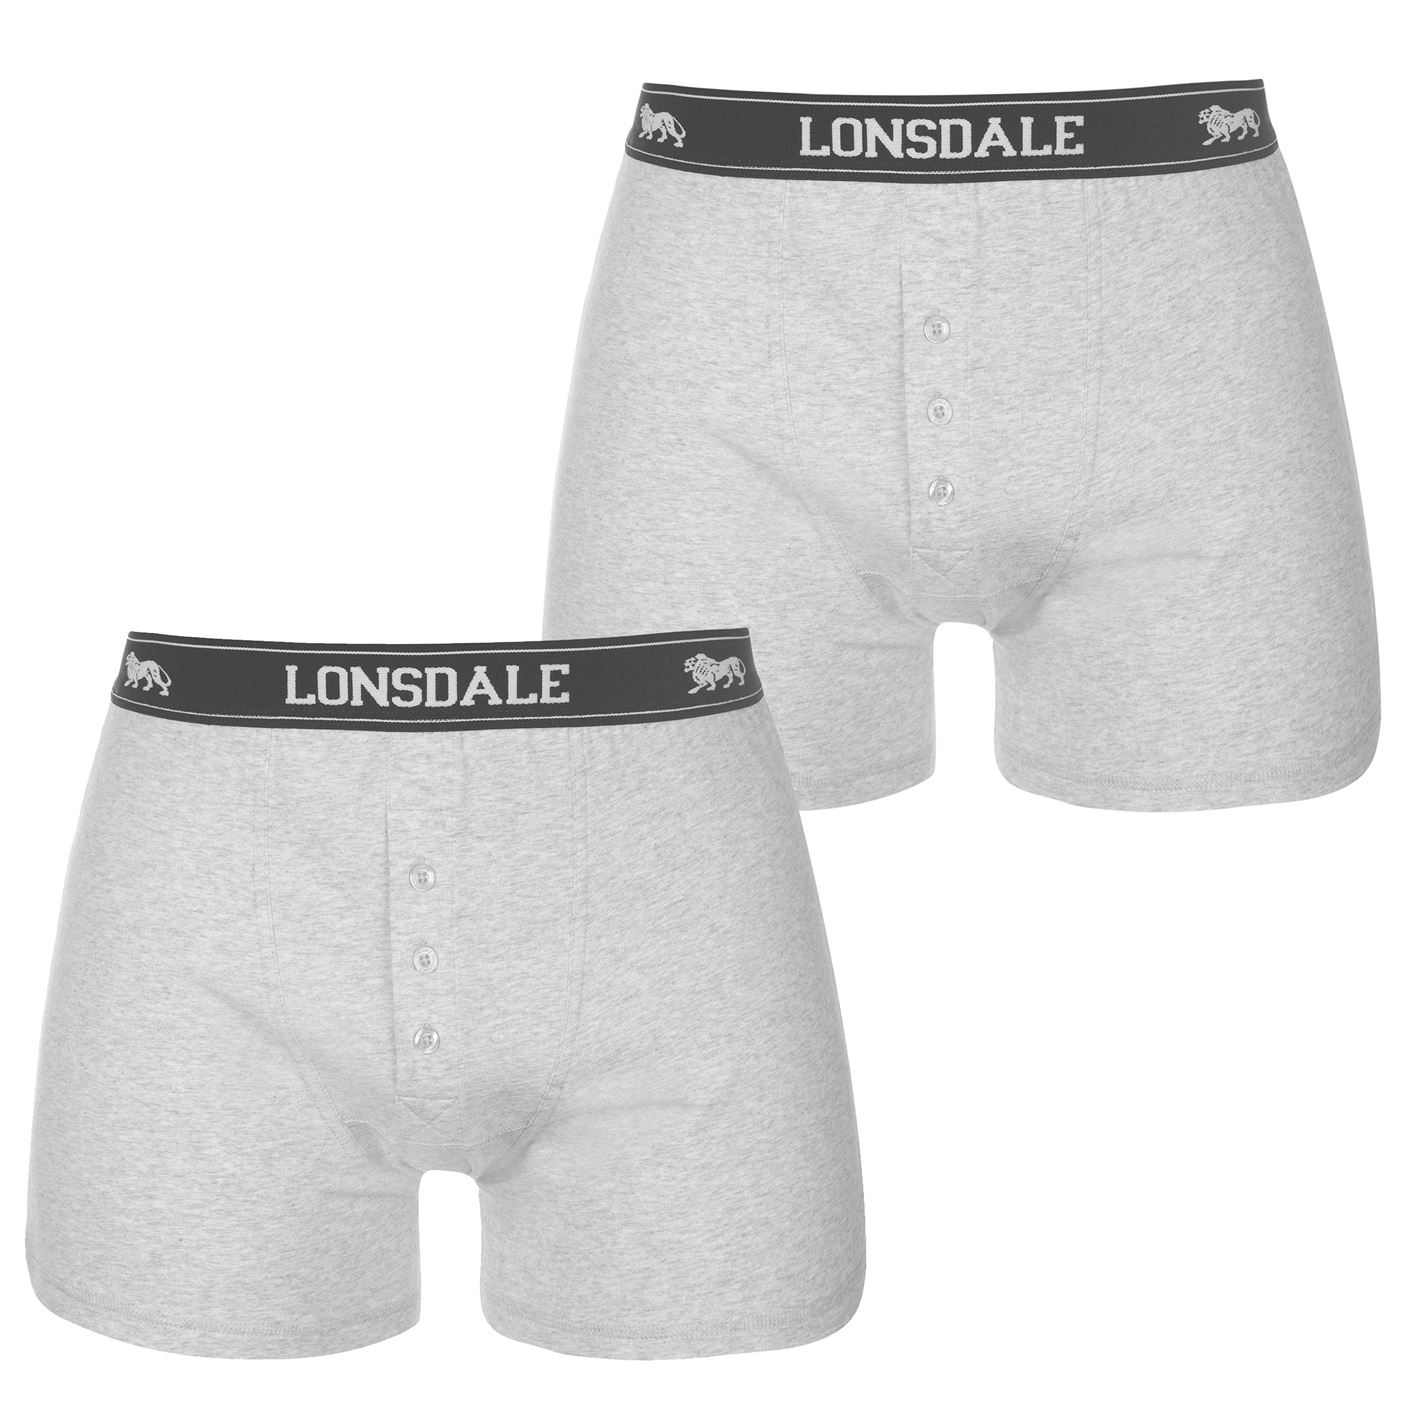 Lonsdale Mens 2 Pack Cotton Boxers